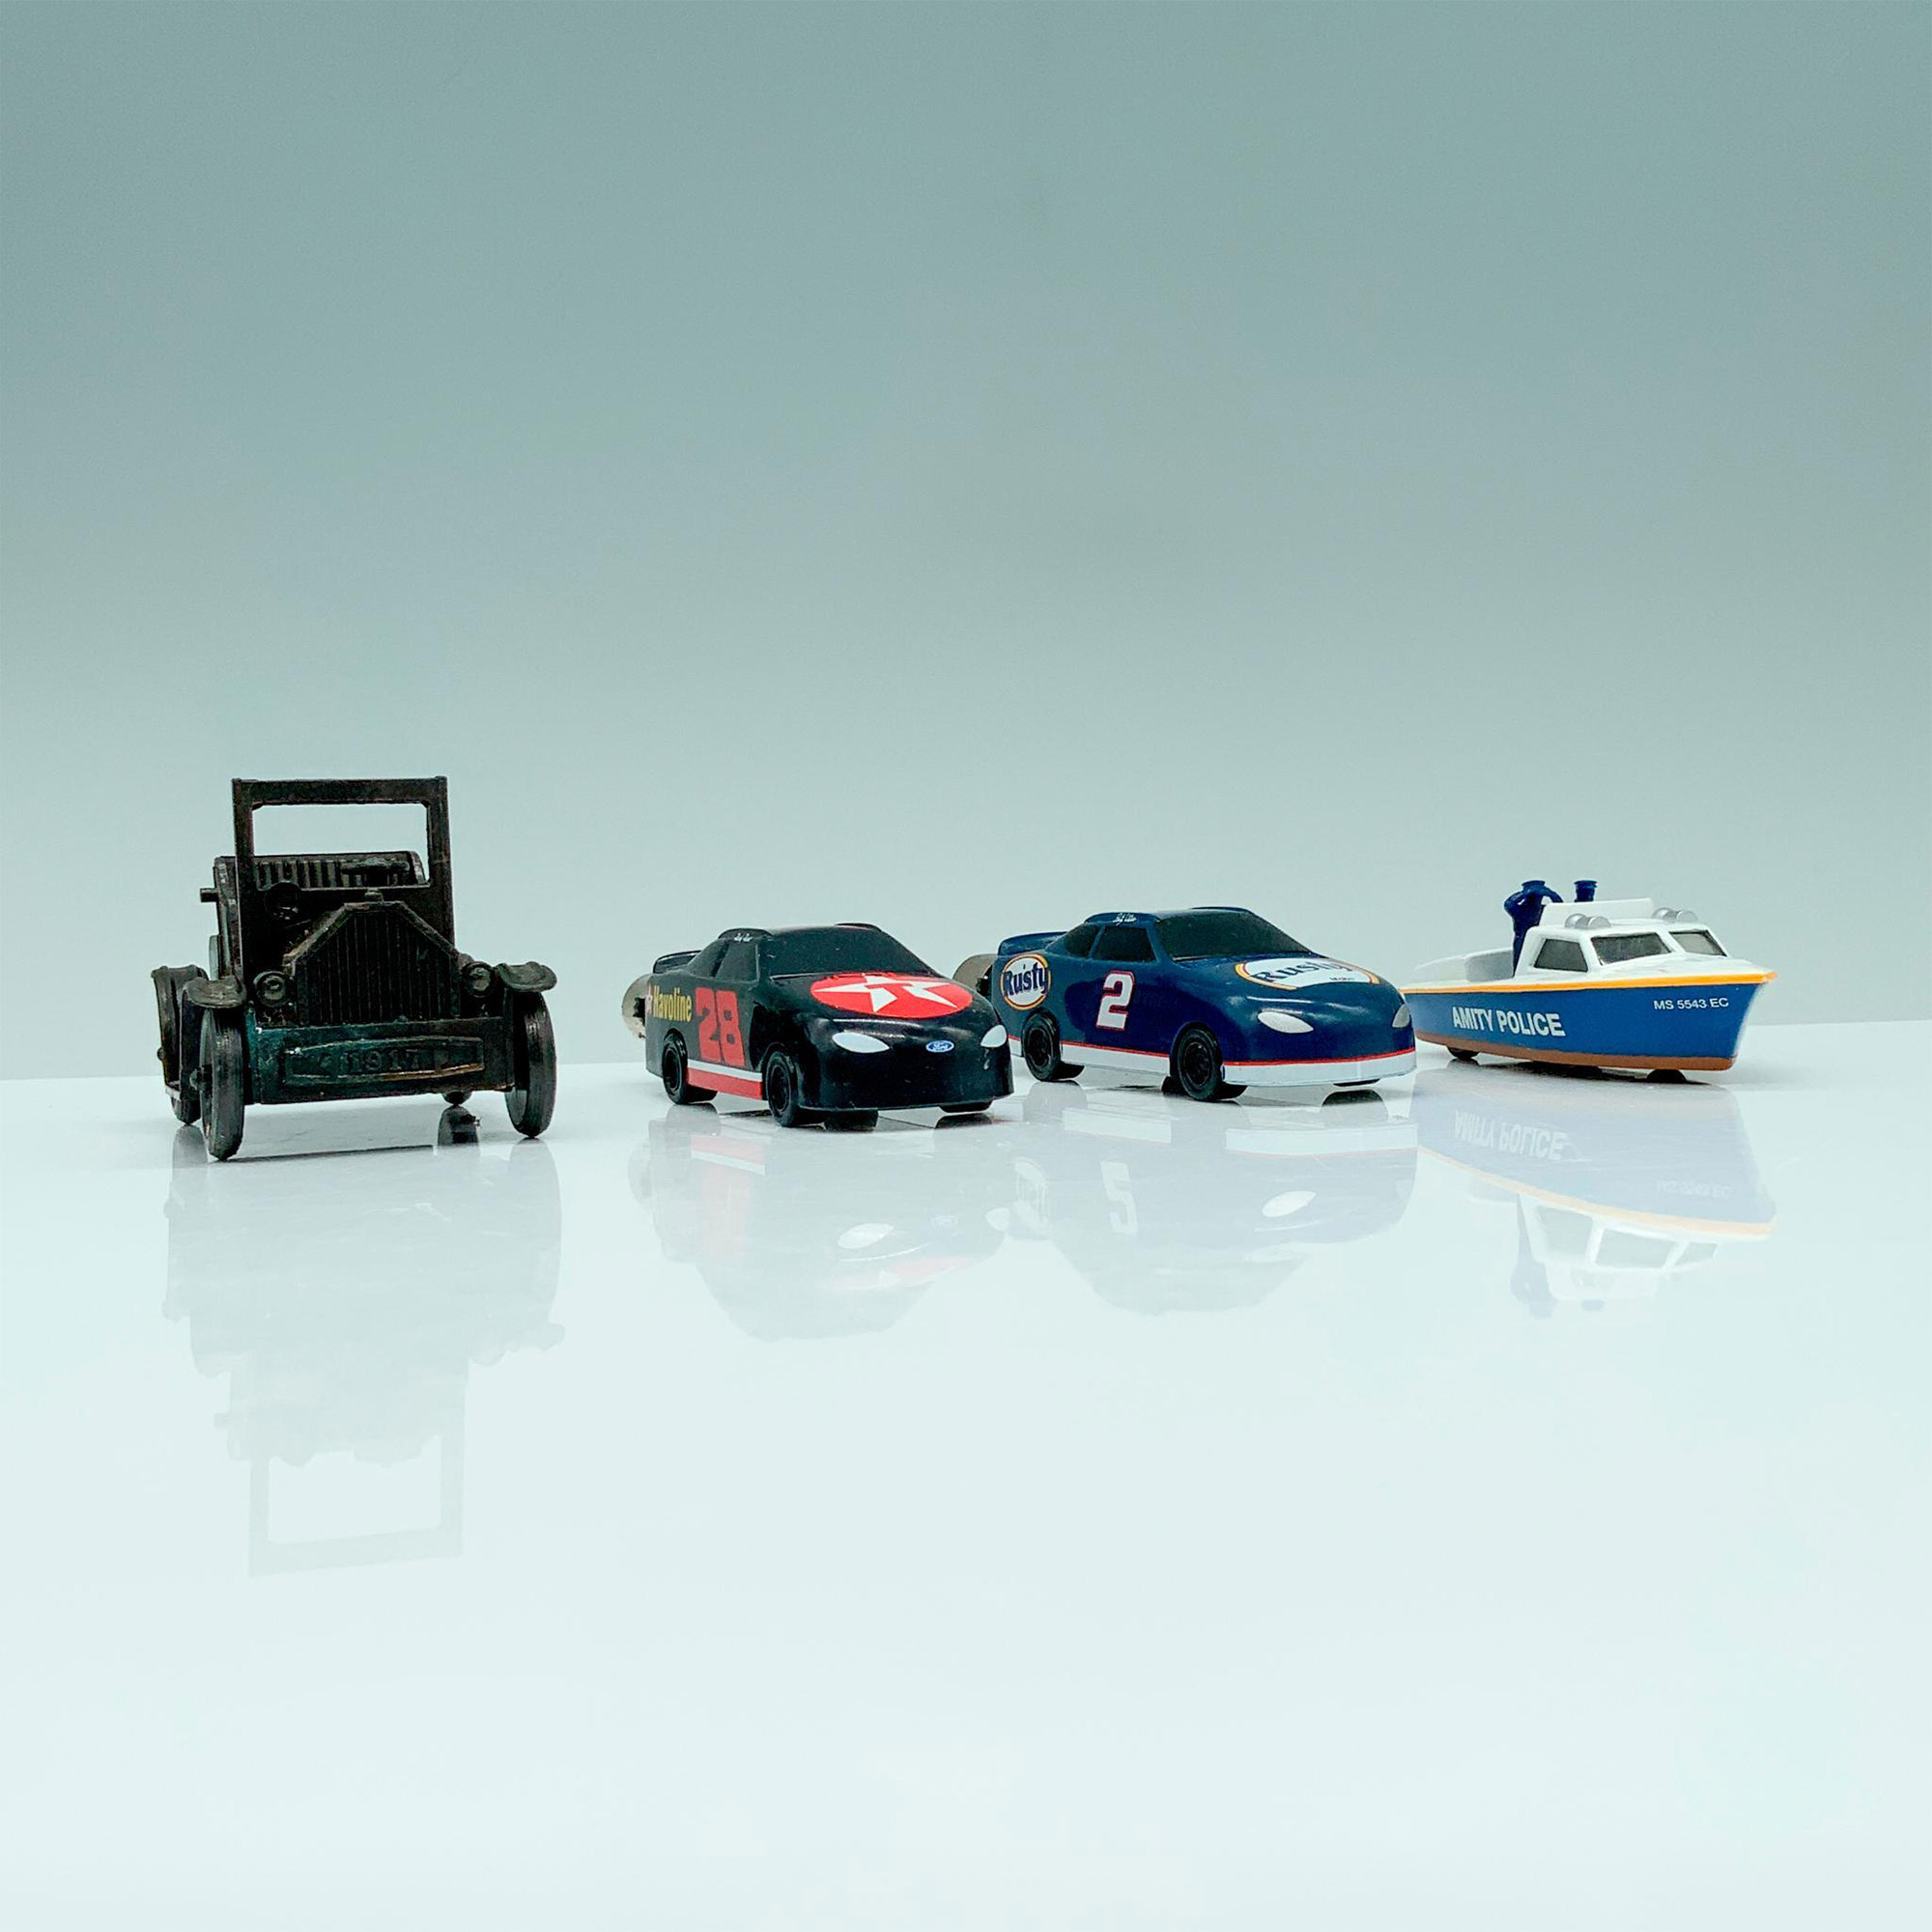 4pc Toy Car FigureTools and Boat Figure